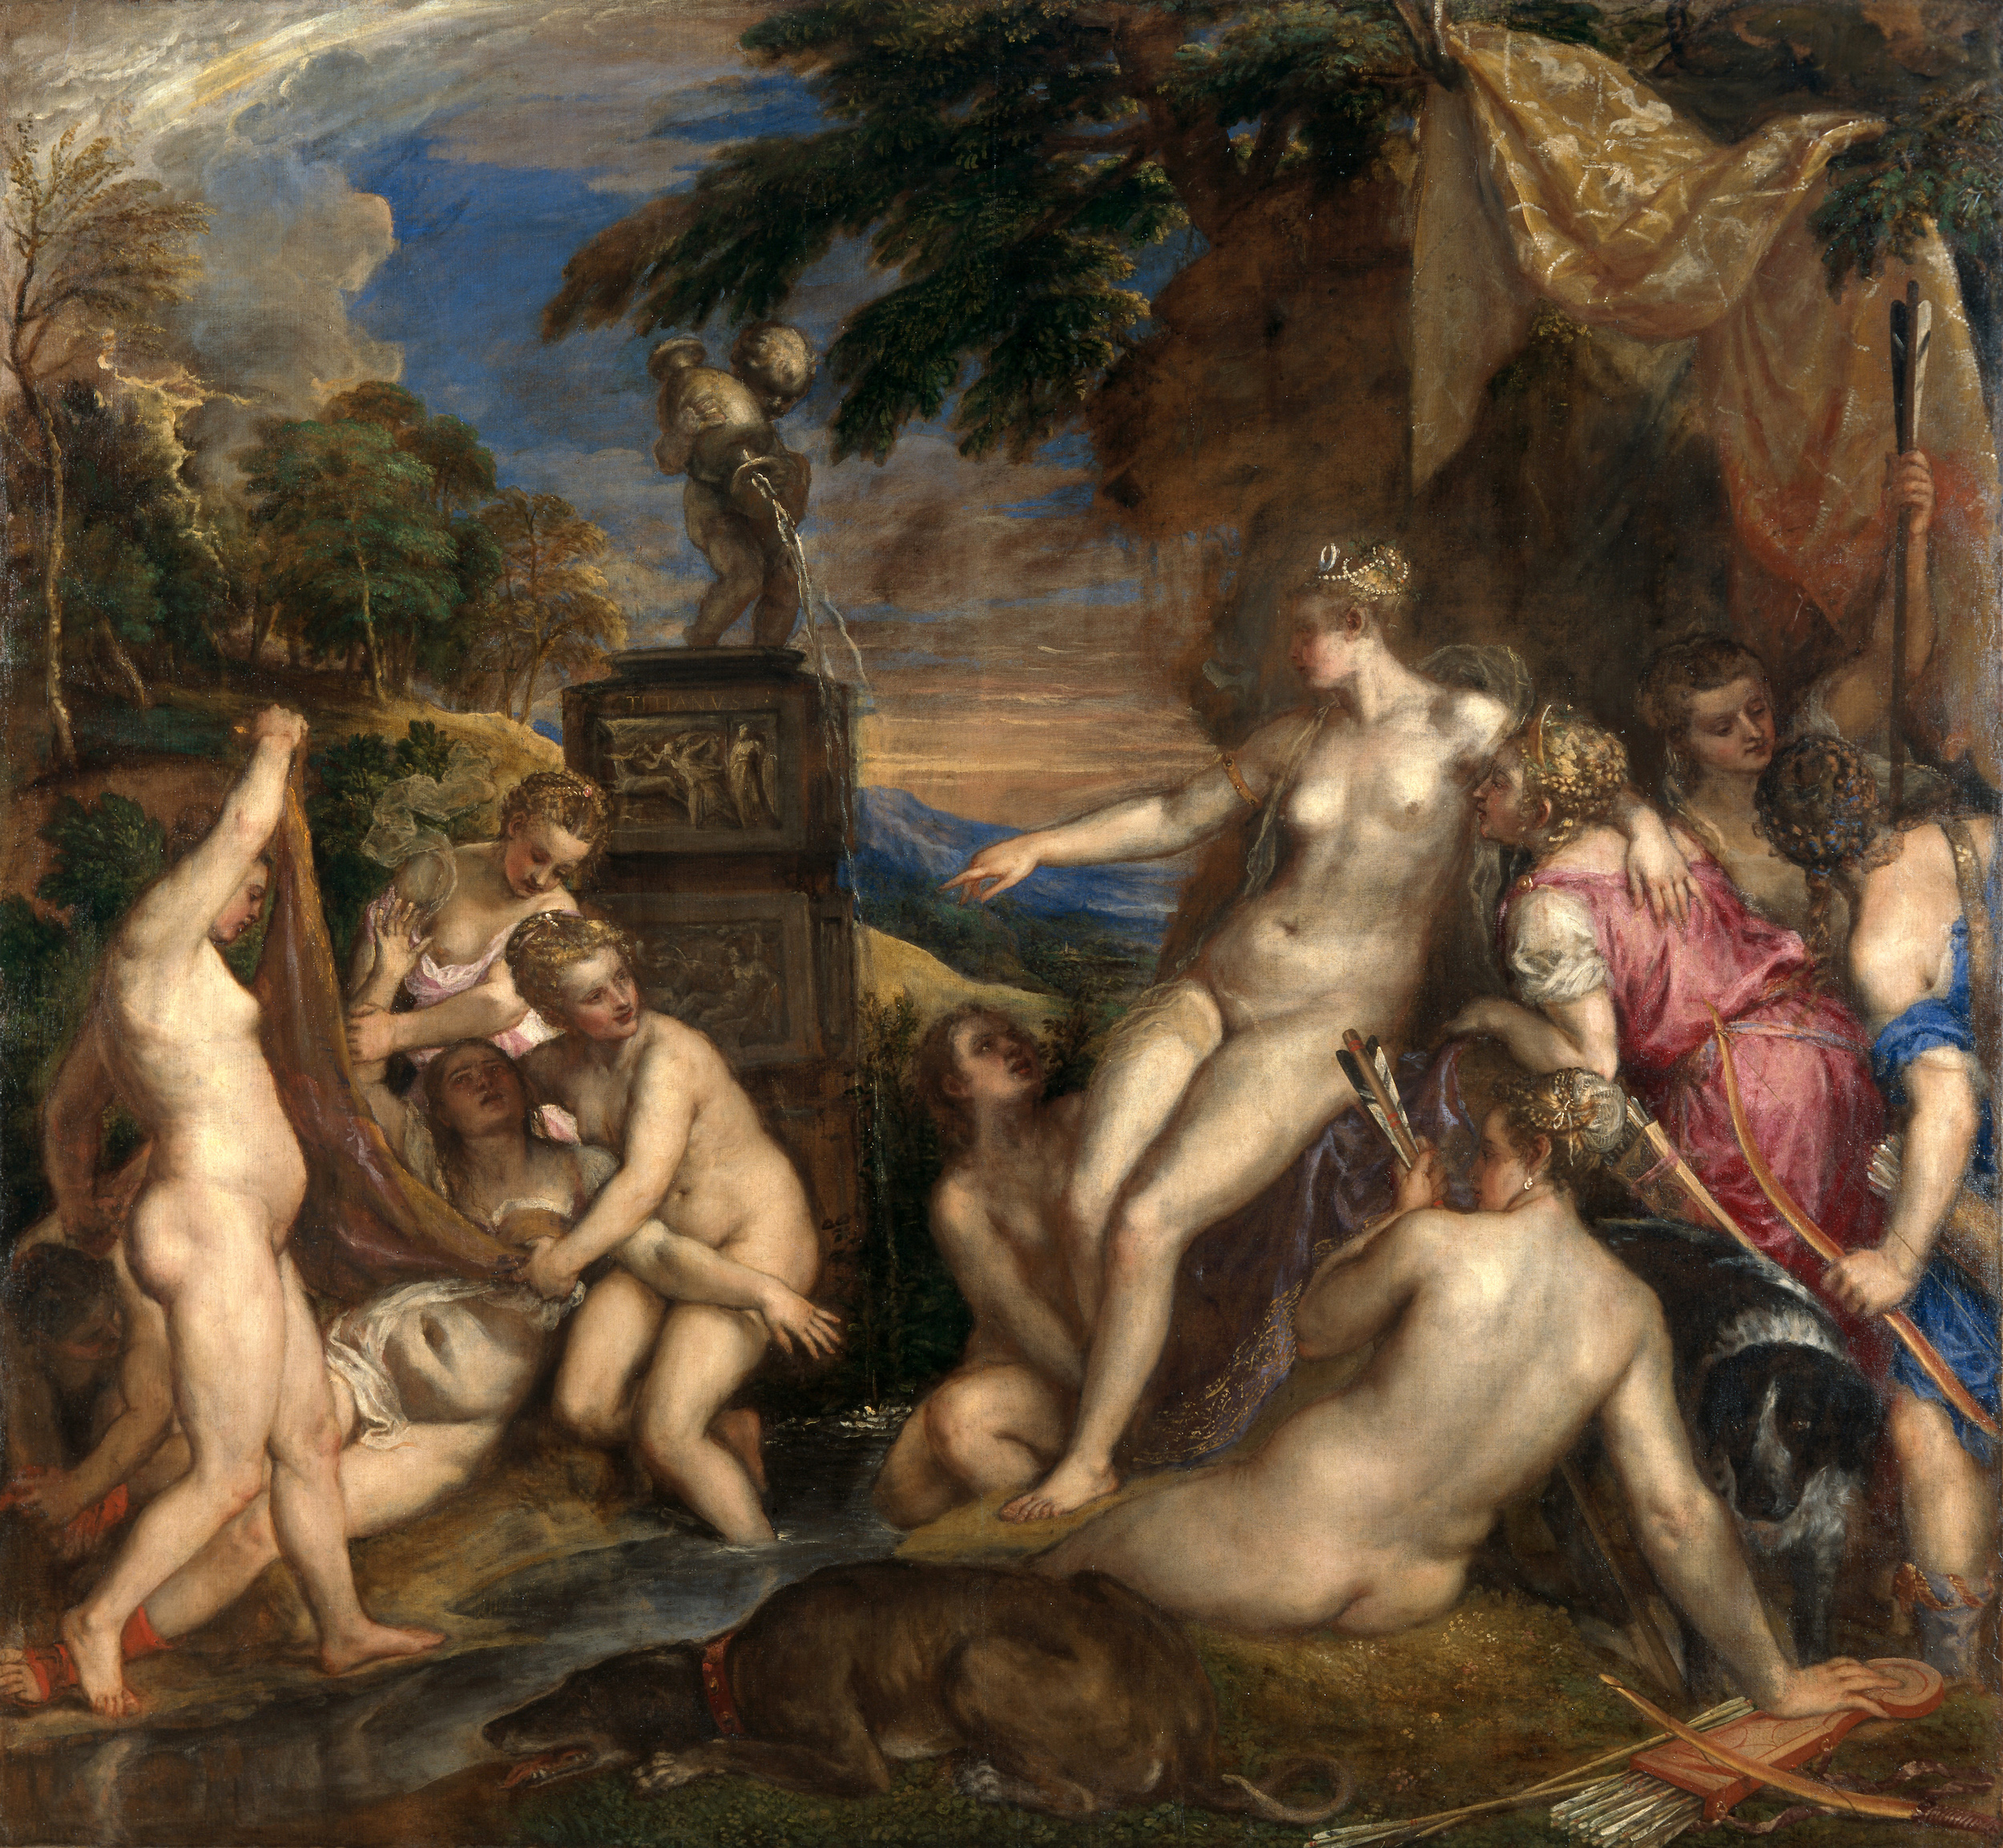 Diane et Callisto by  Titian - 1556-9 